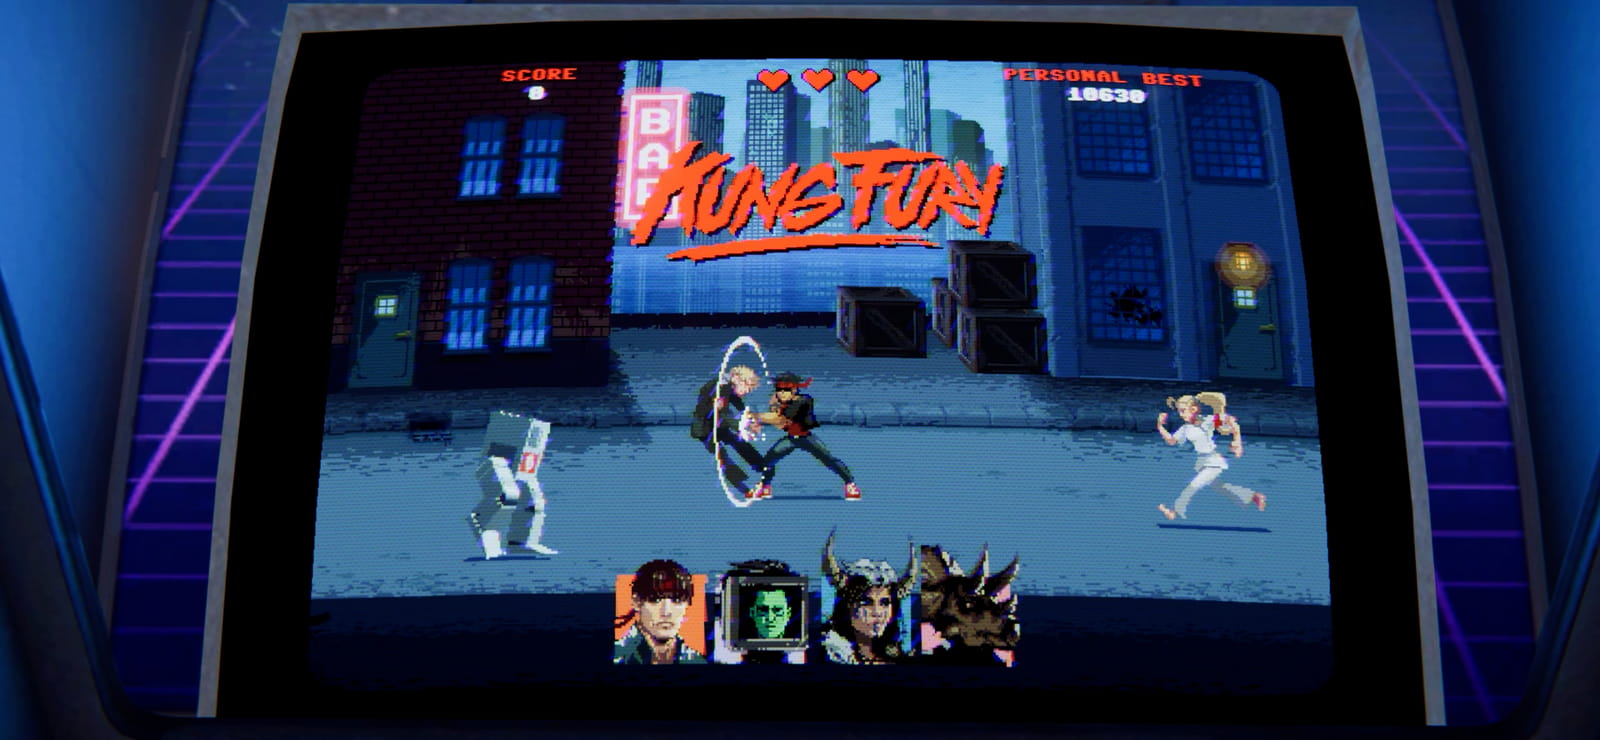 Arcade Paradise - Kung Fury: Street Rage